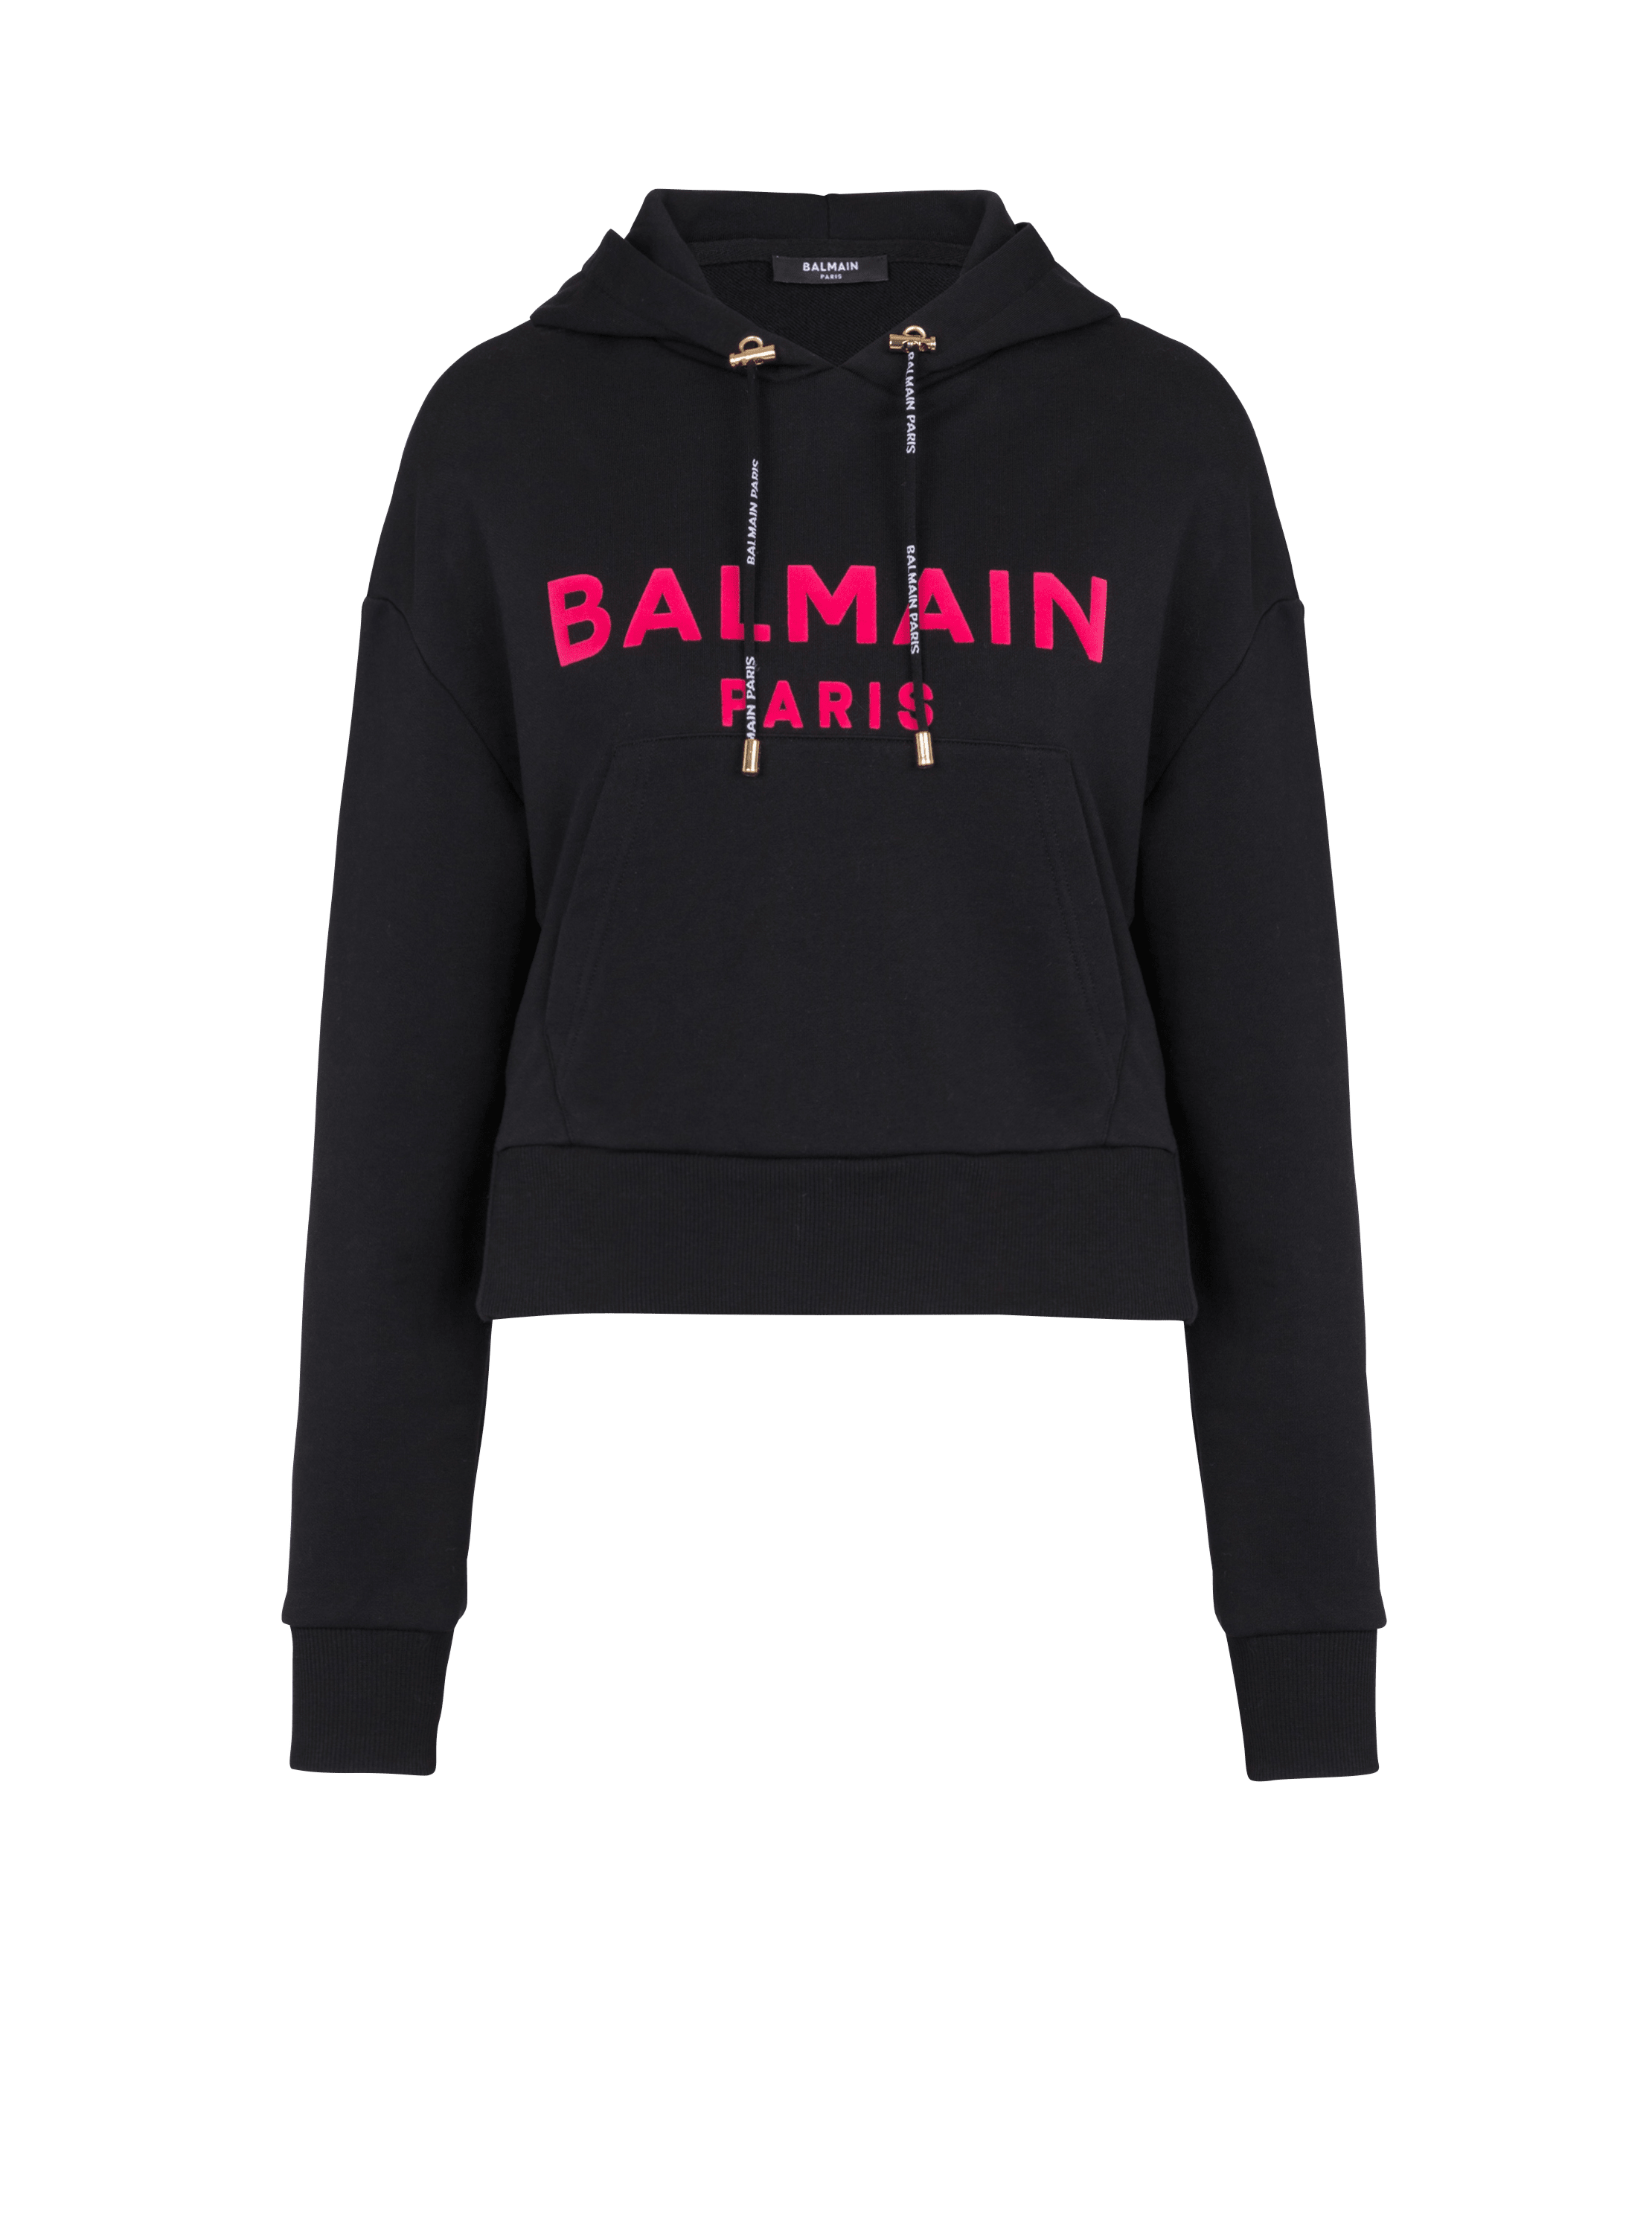 Cotton printed Balmain logo sweatshirt, black, hi-res